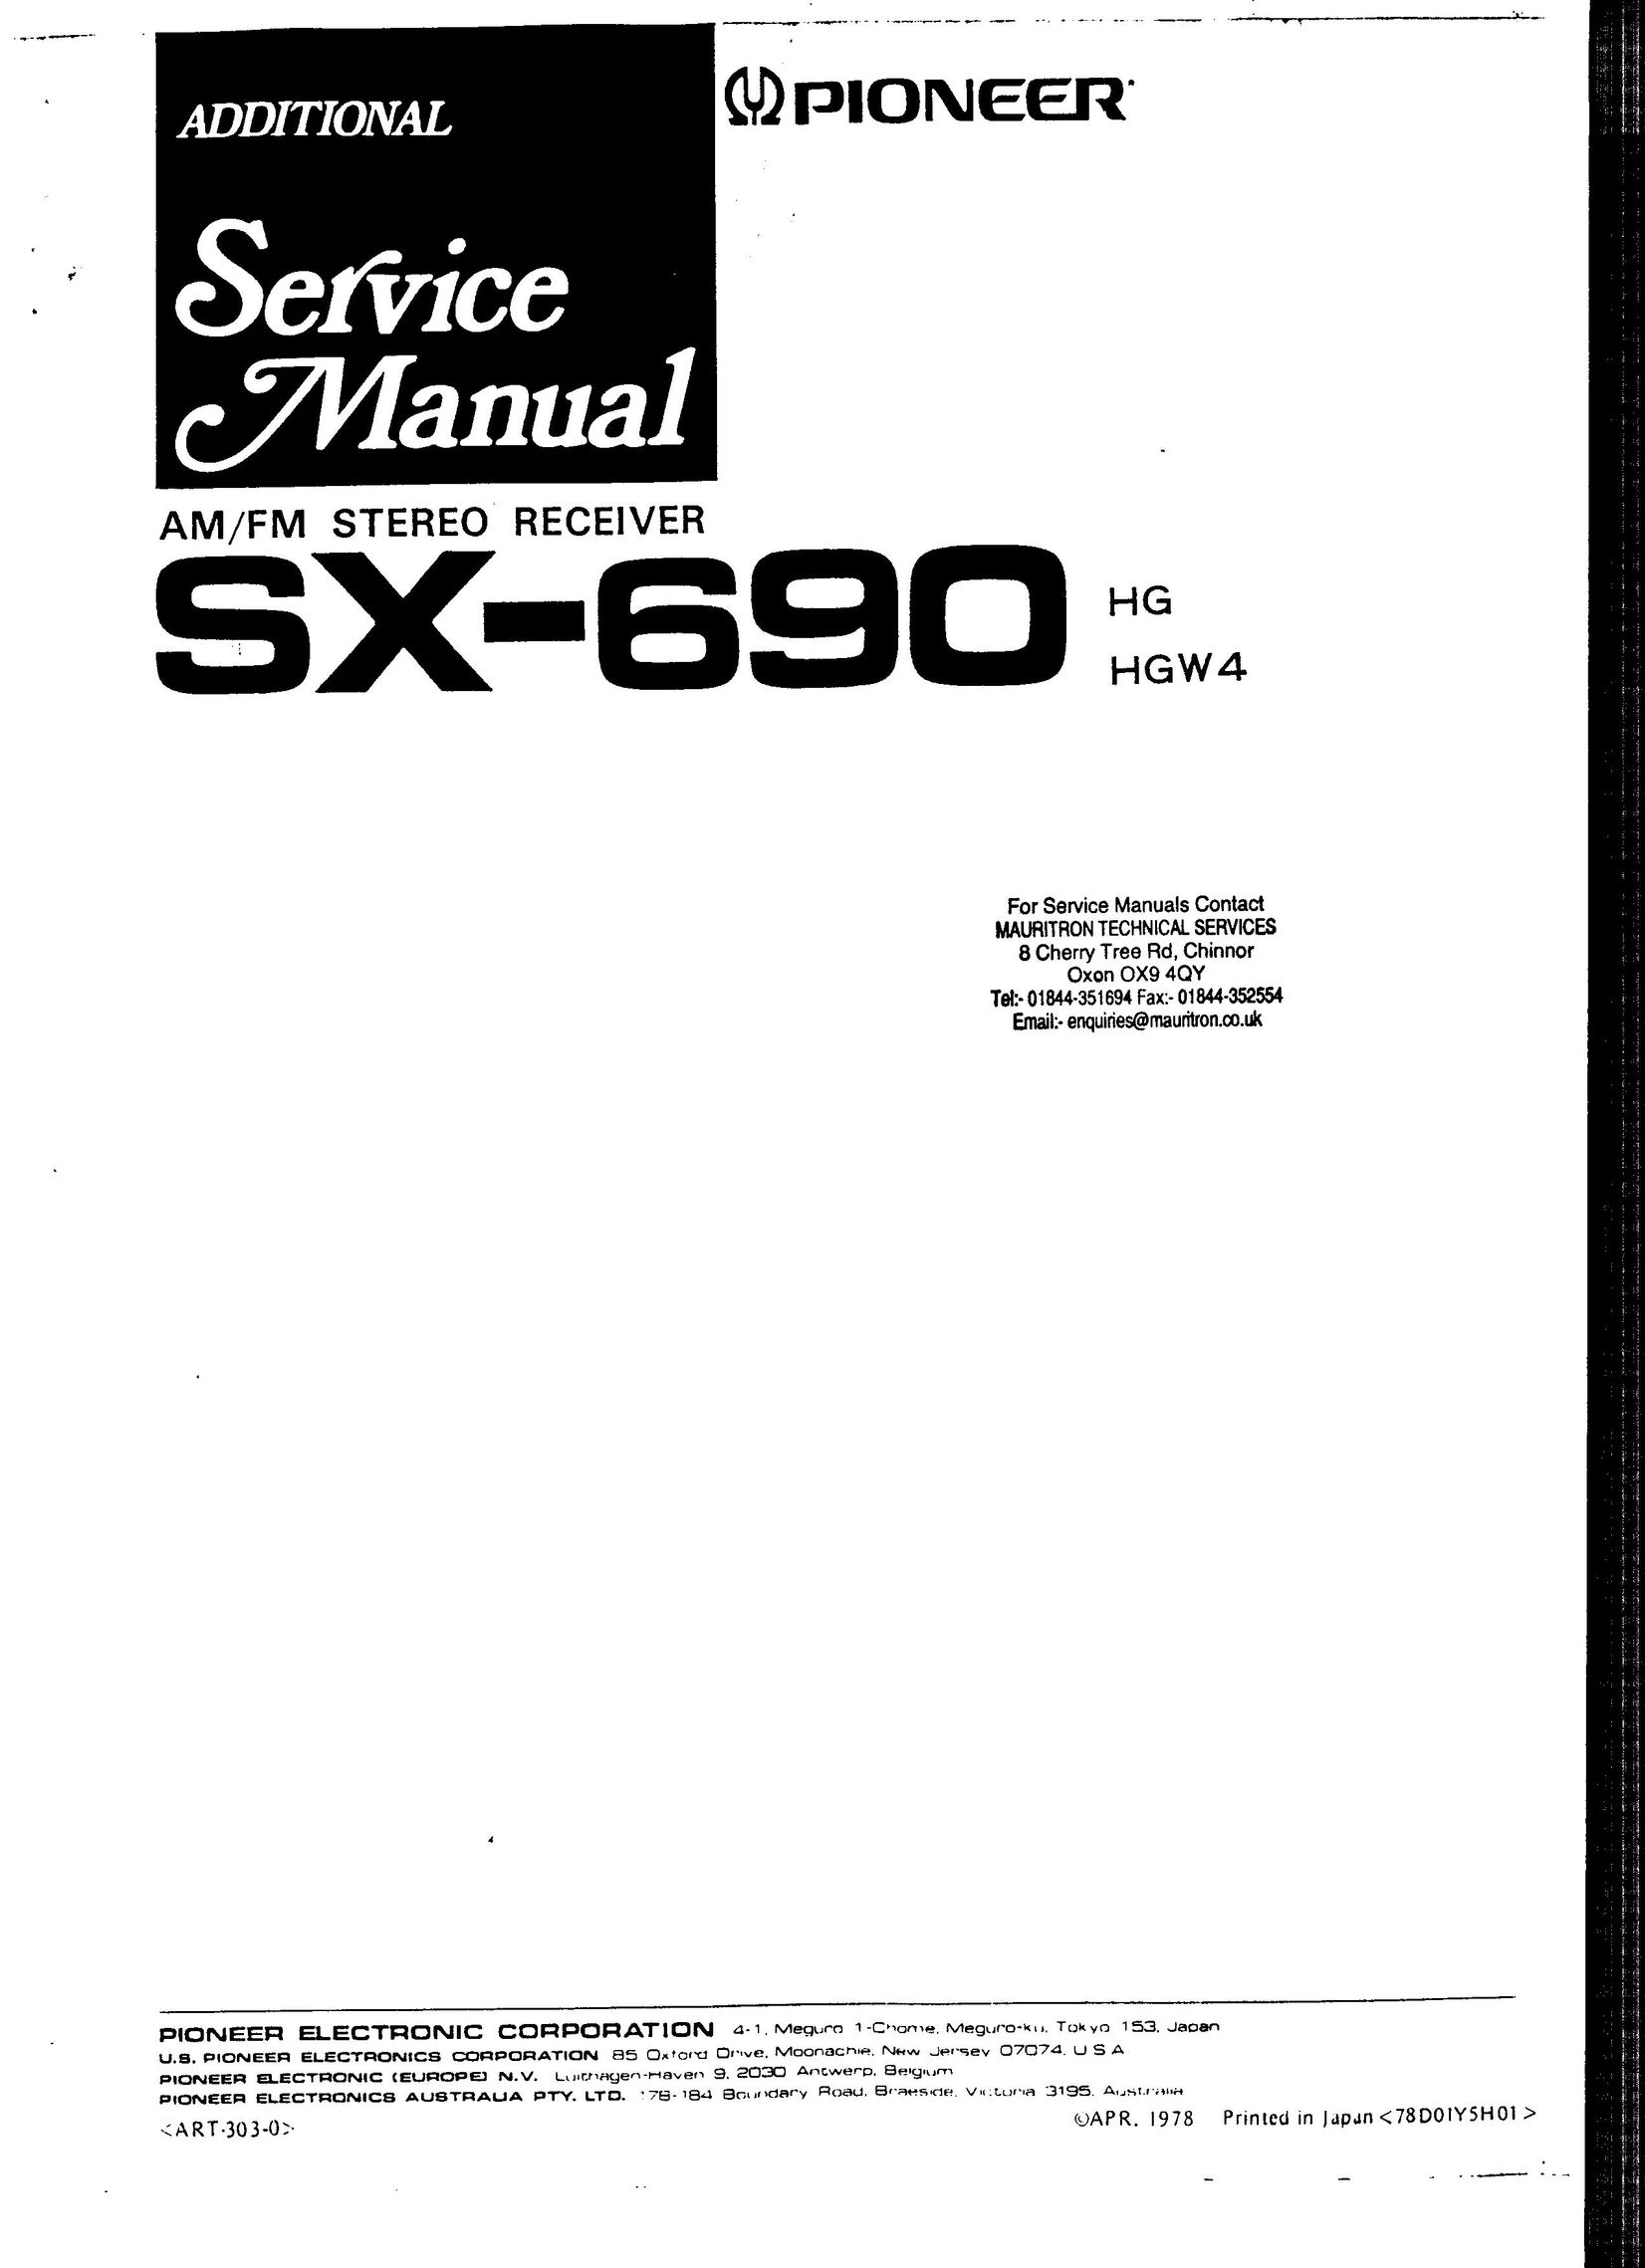 Pioneer HGW4 Stereo Receiver User Manual